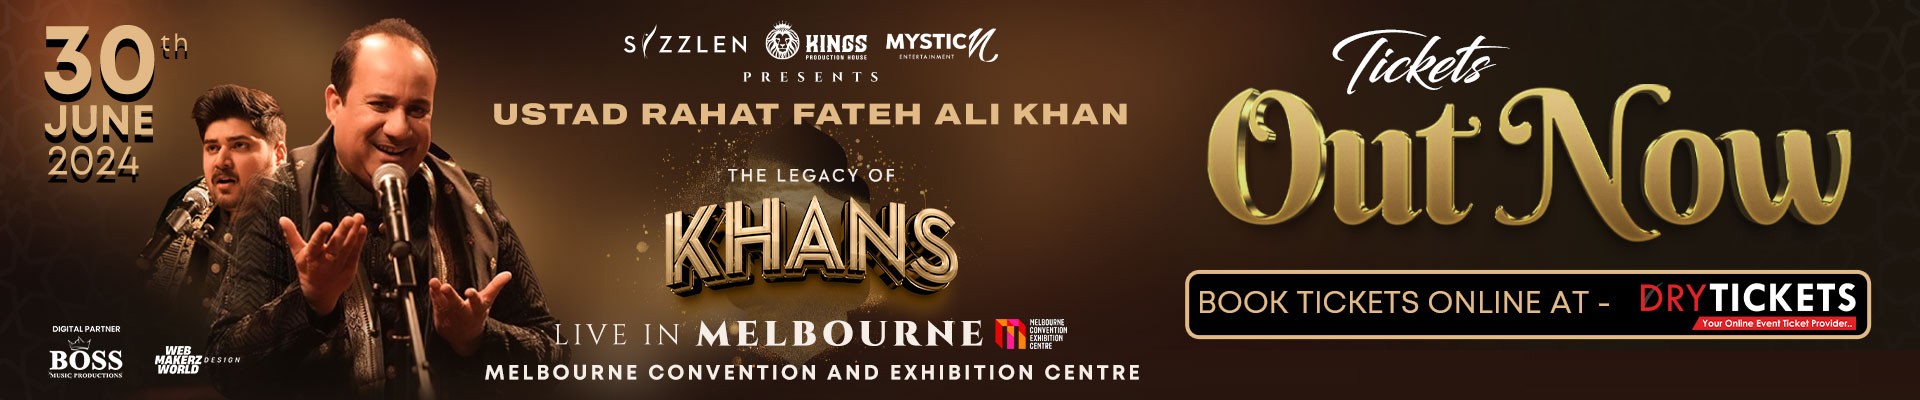 The Legacy of KHANS - Ustad Rahat Fateh Ali Khan Live In Concert Melbourne